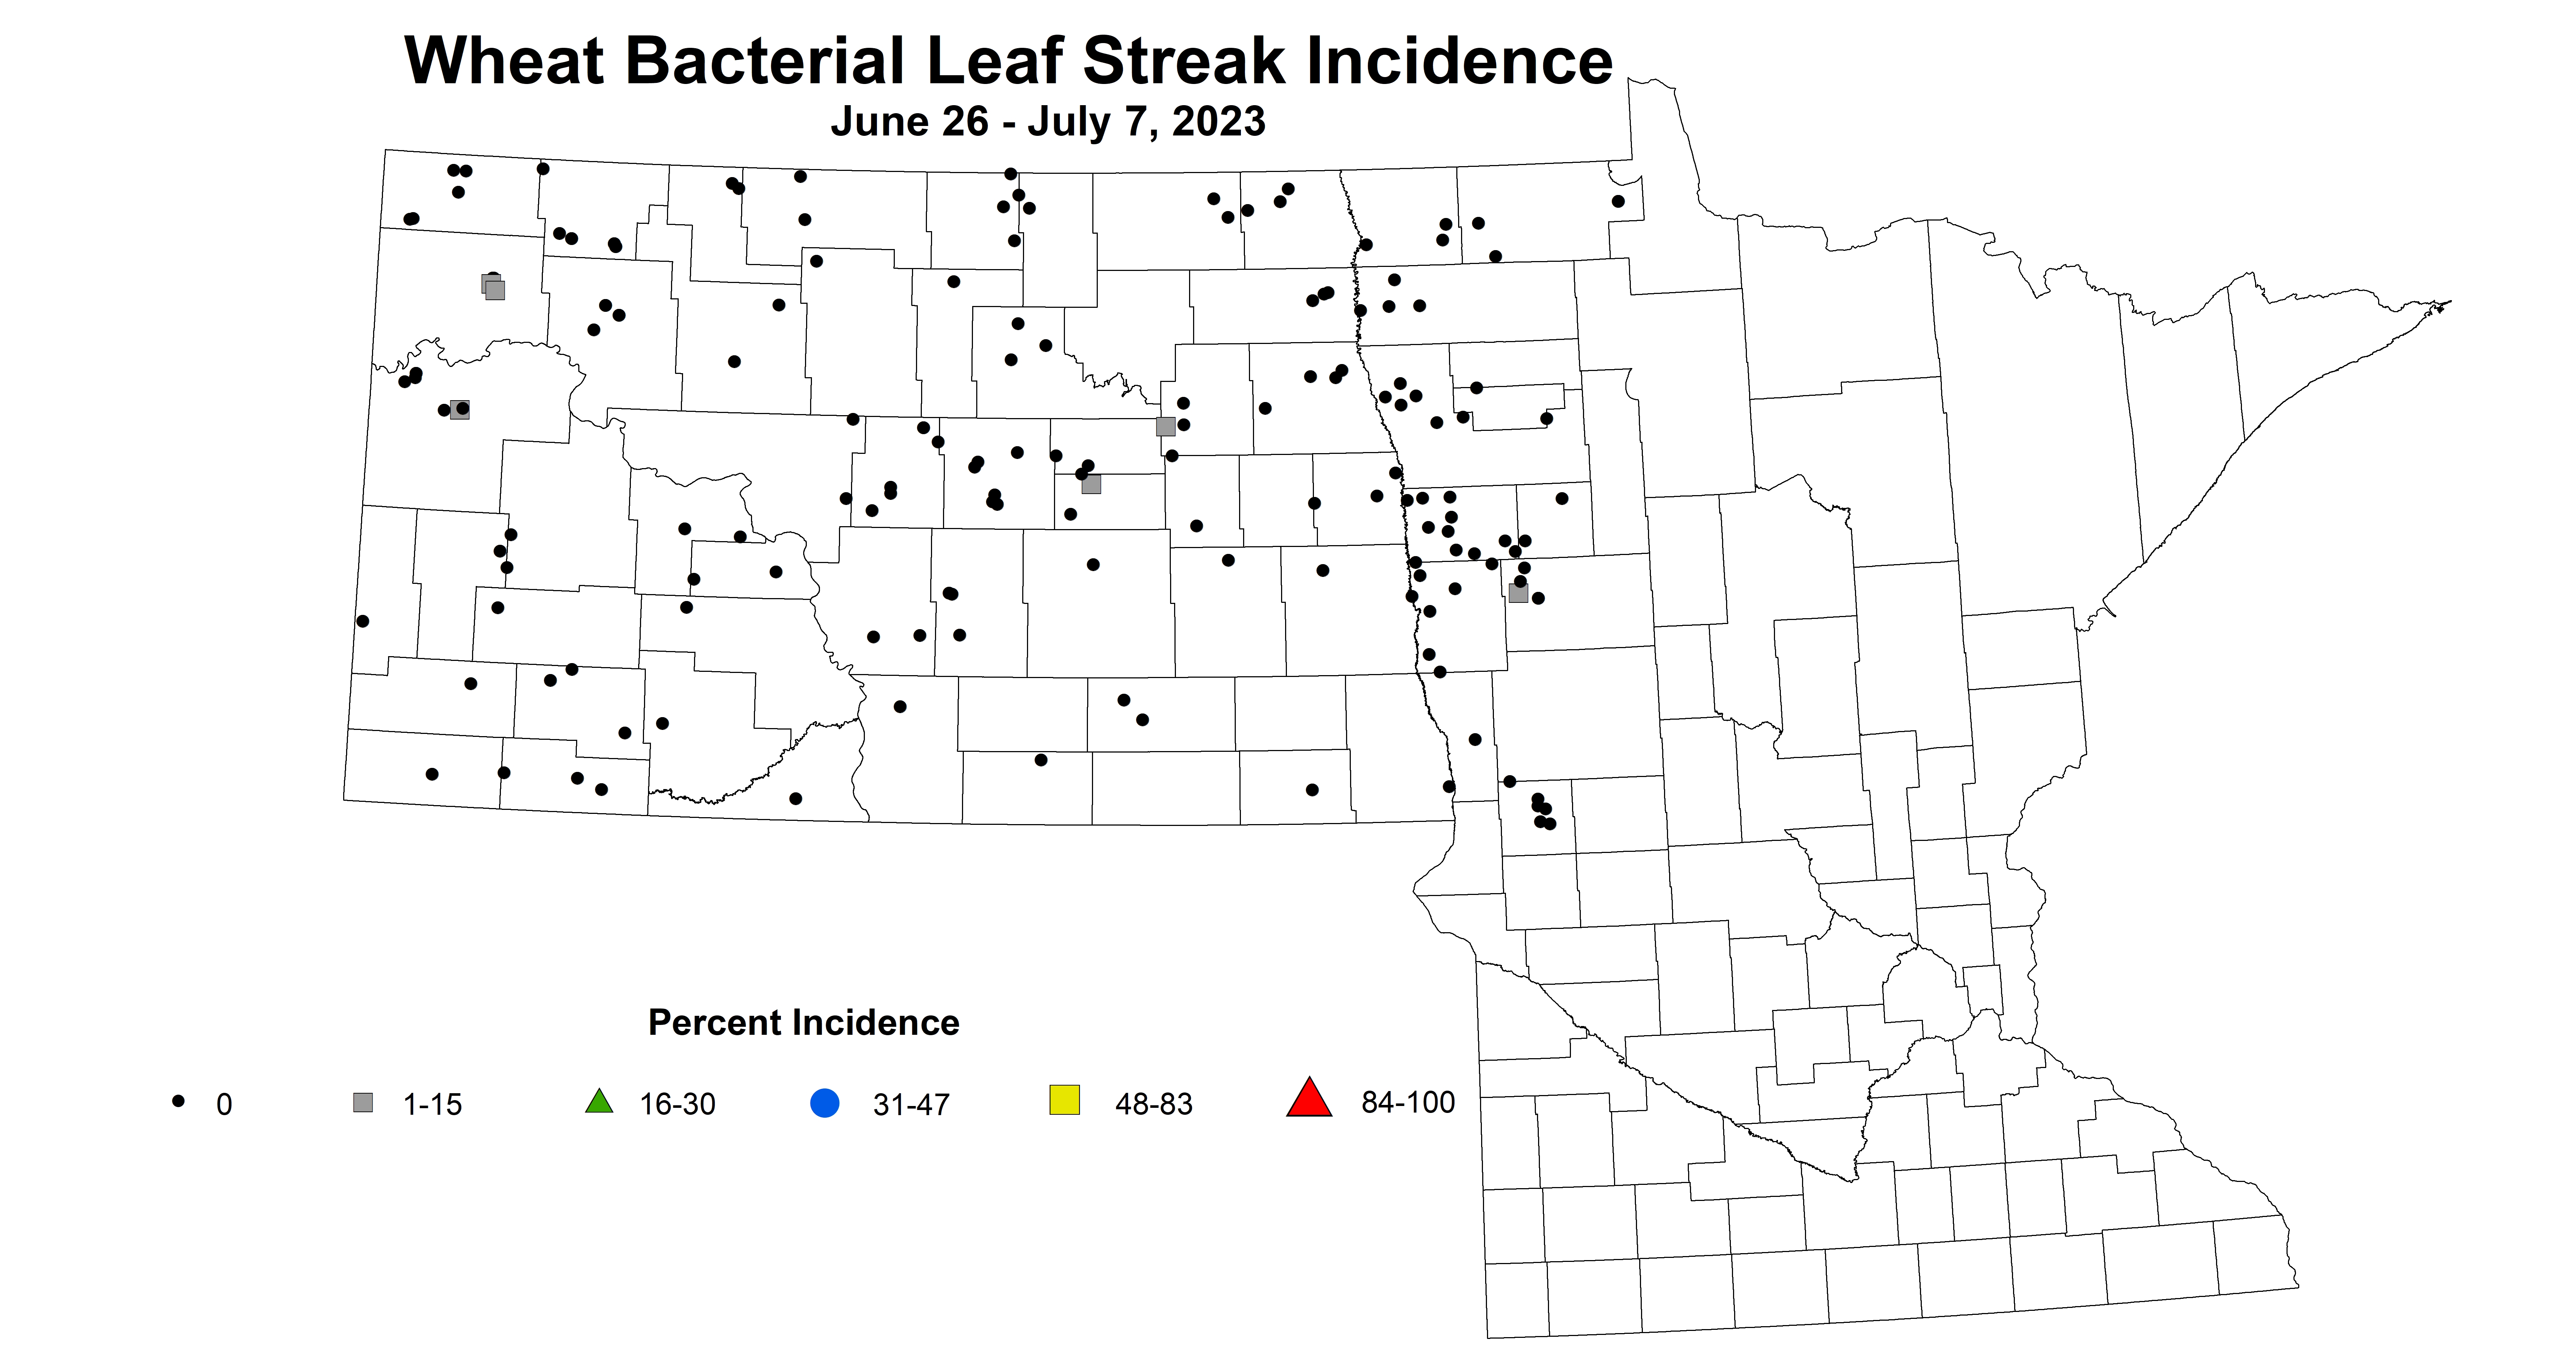 wheat bacterial leaf streak incidence June 26 - July 7 2023